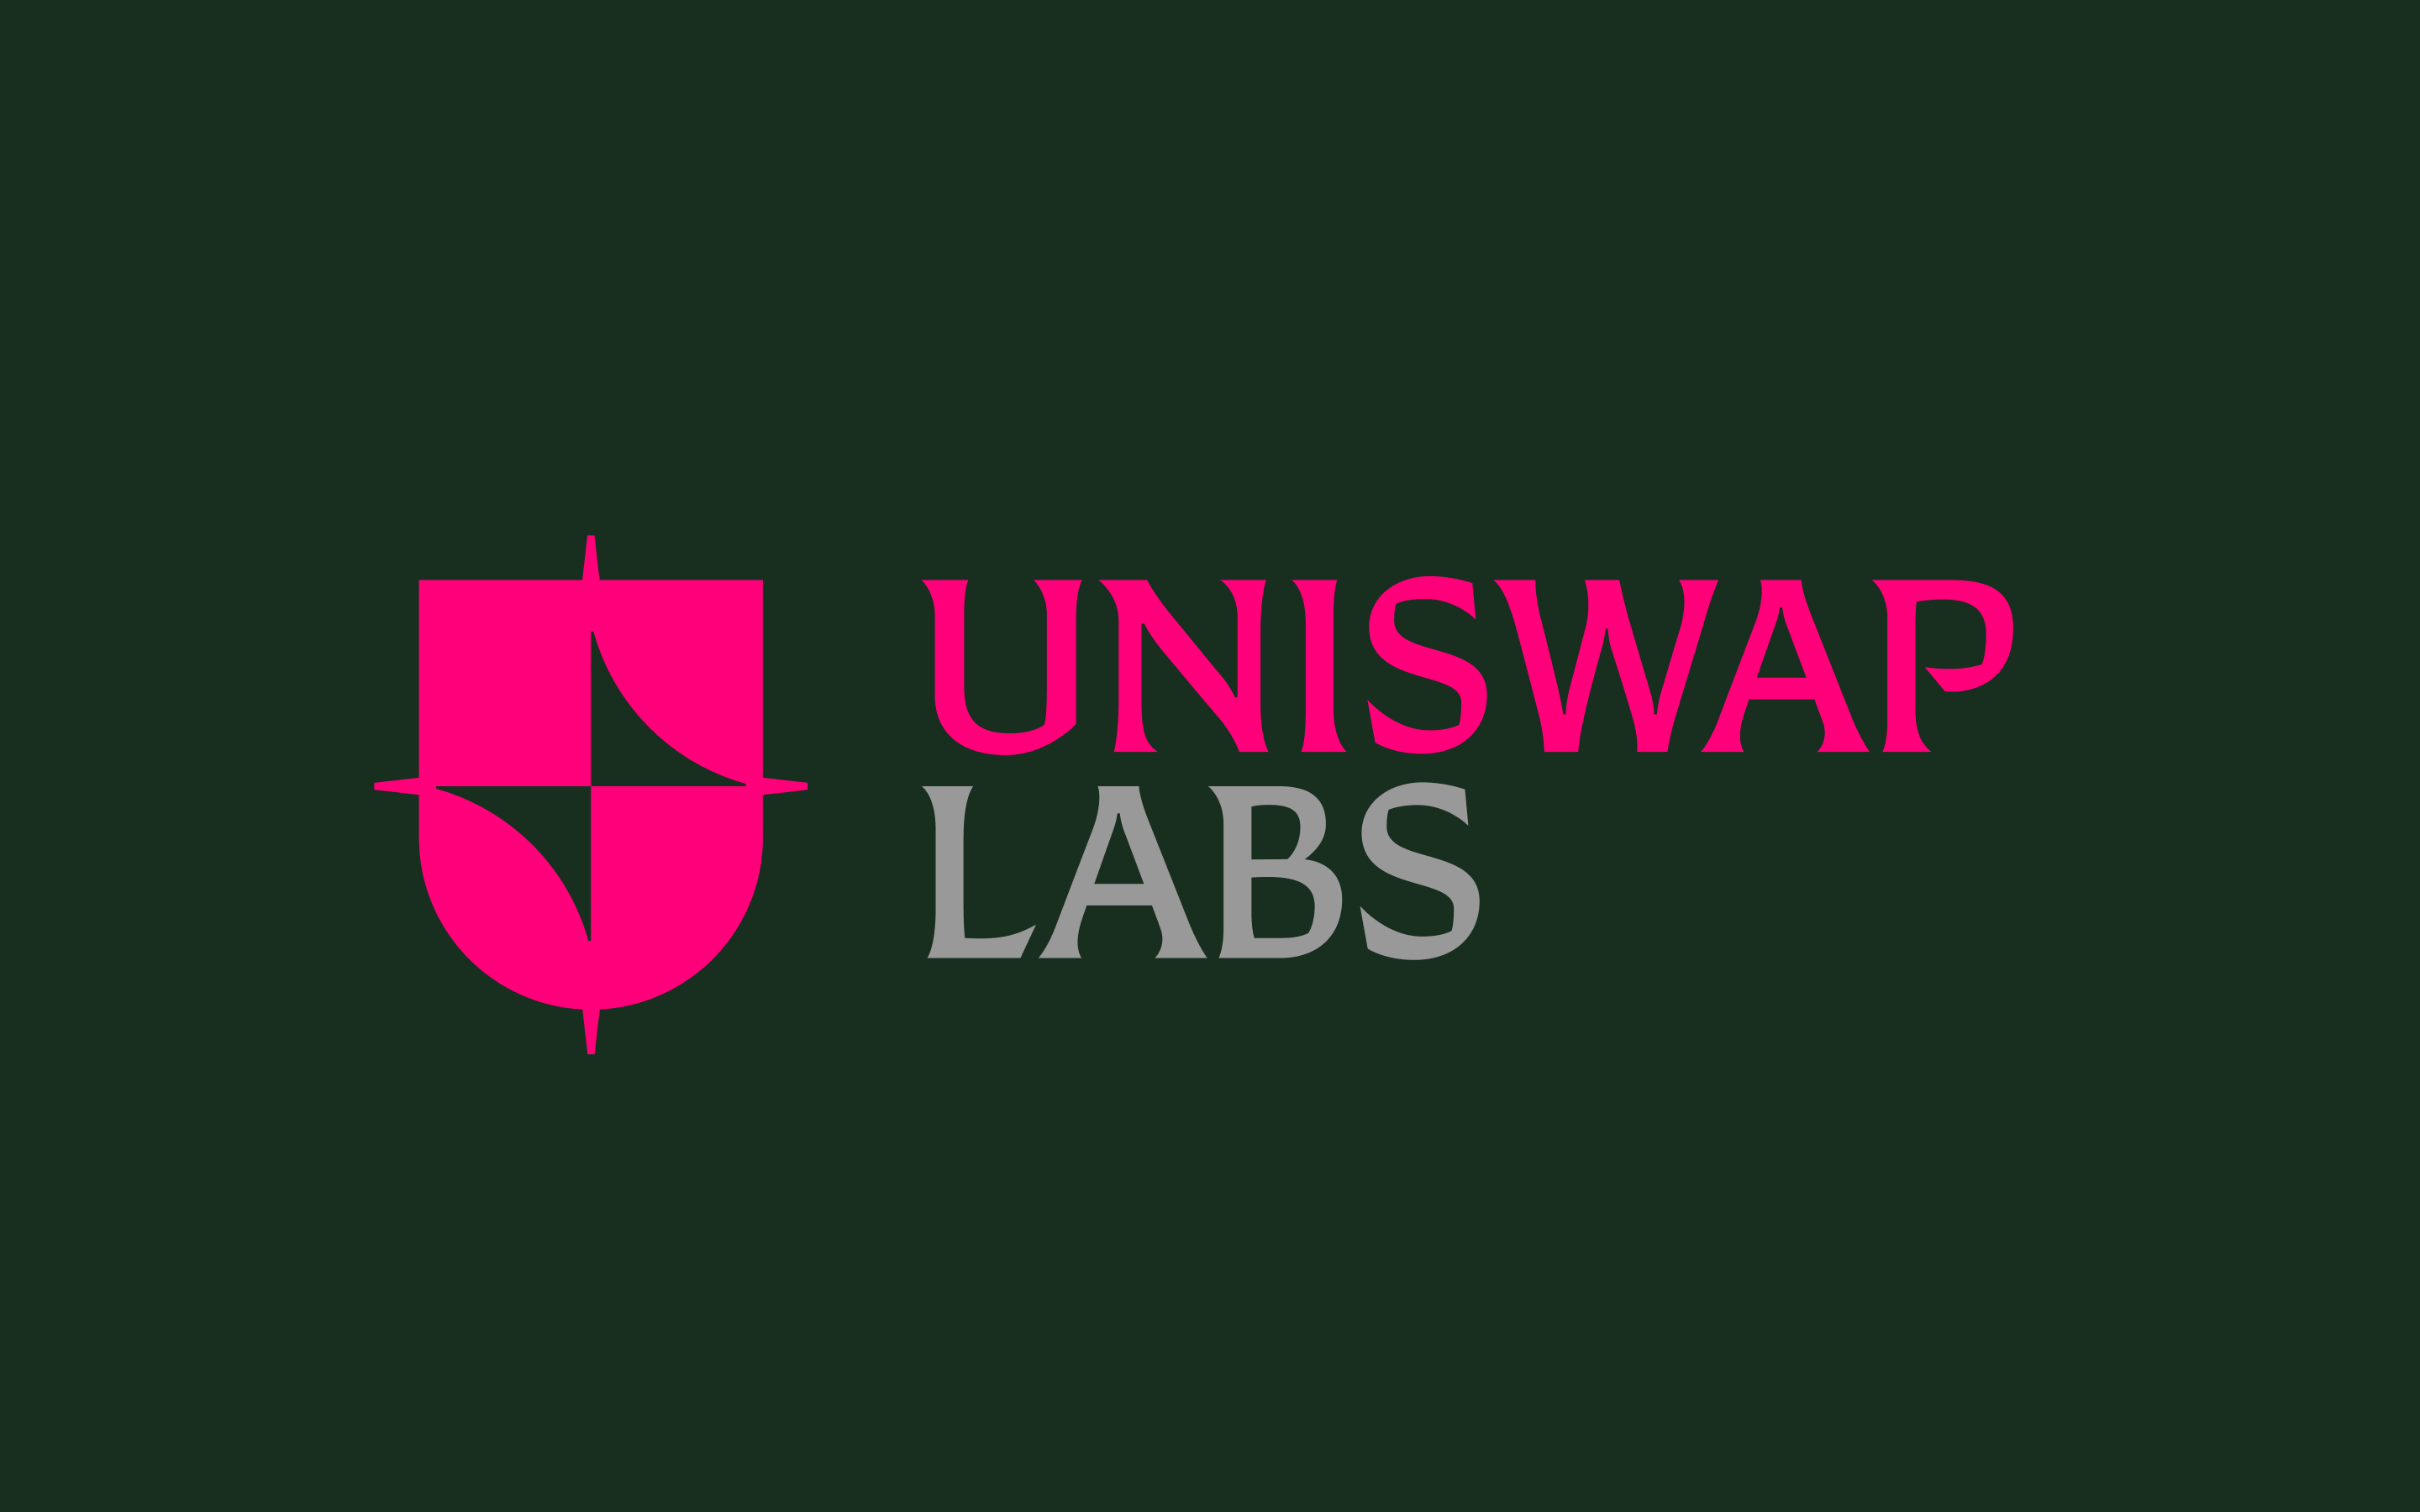 Uniswap logo over green background